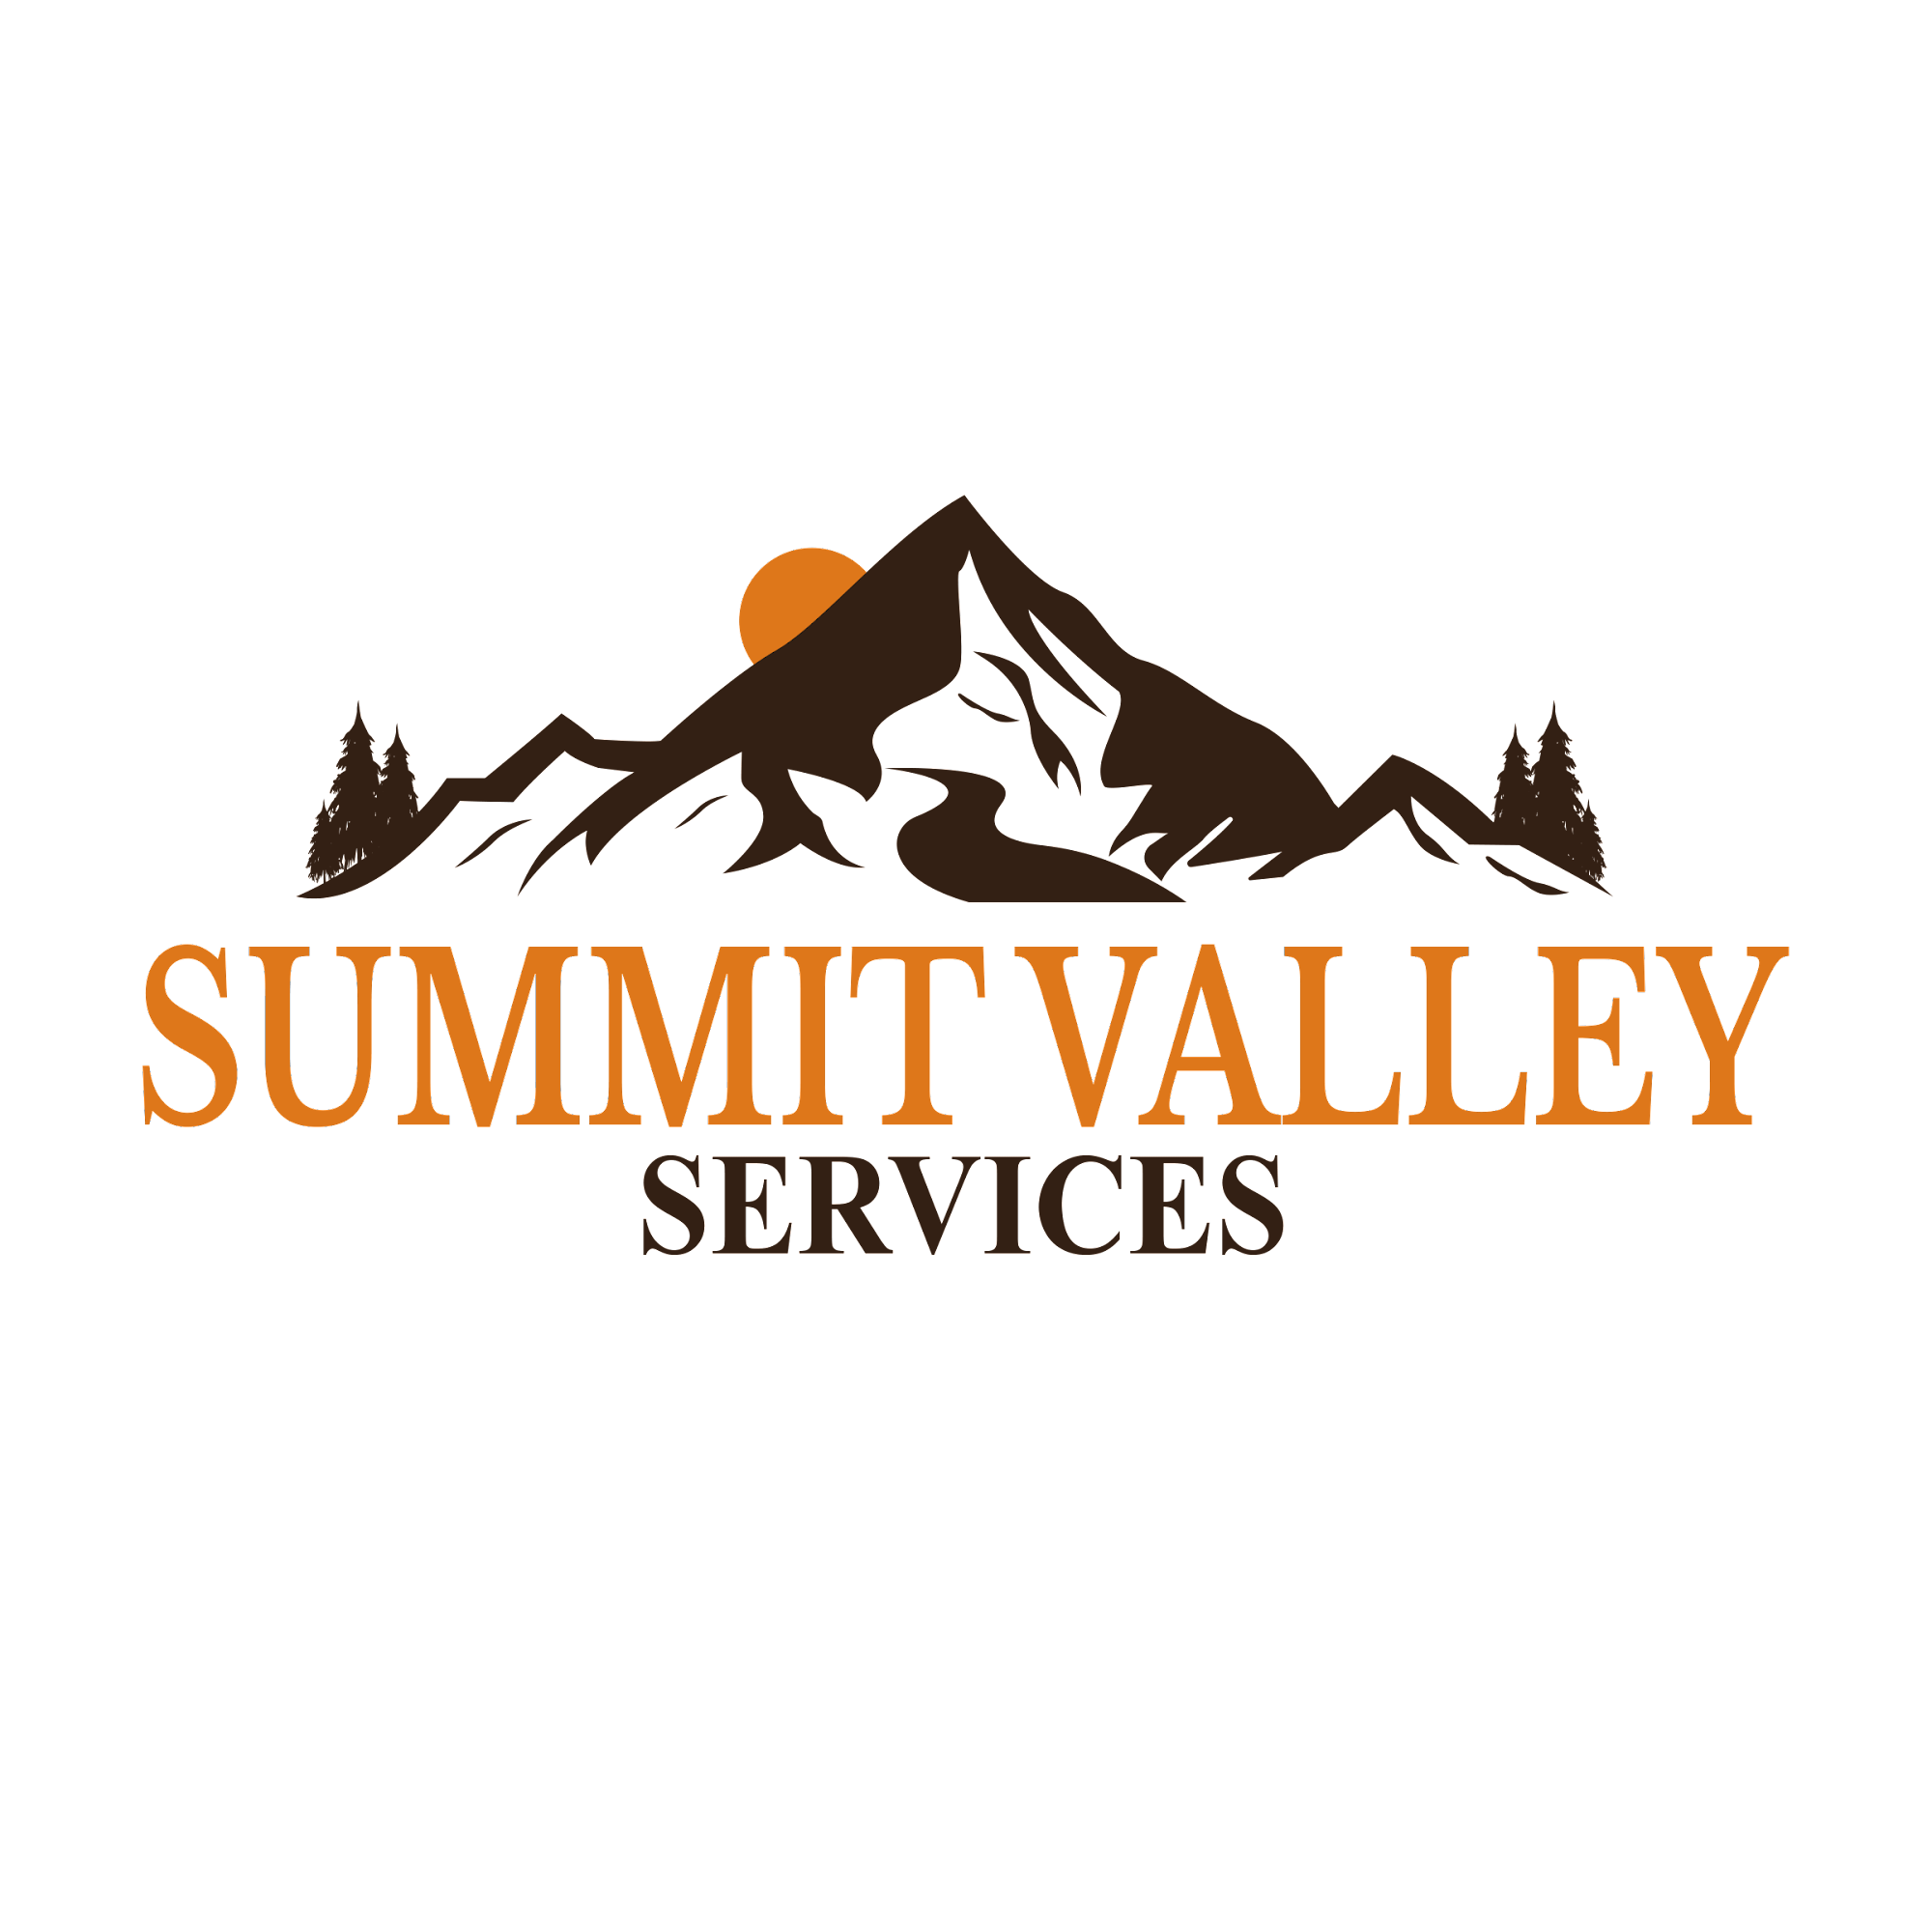 Summit Valley Services - Cleveland